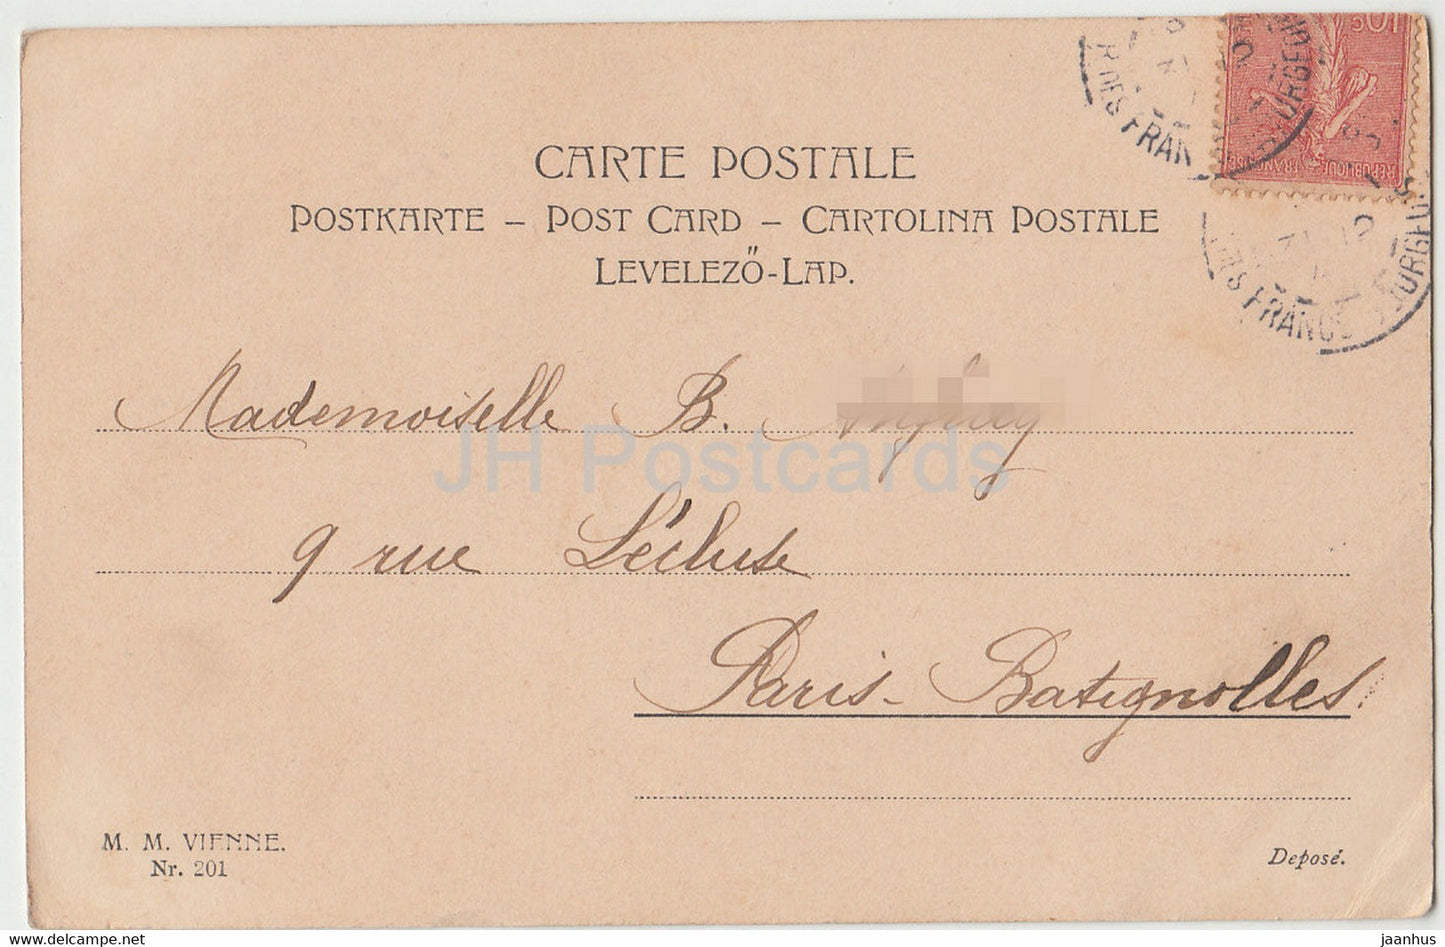 Birthday Greeting Card - Bonne et Heureuse Annee - flowers - 201 - M M Vienne - old postcard 1904 - France - used